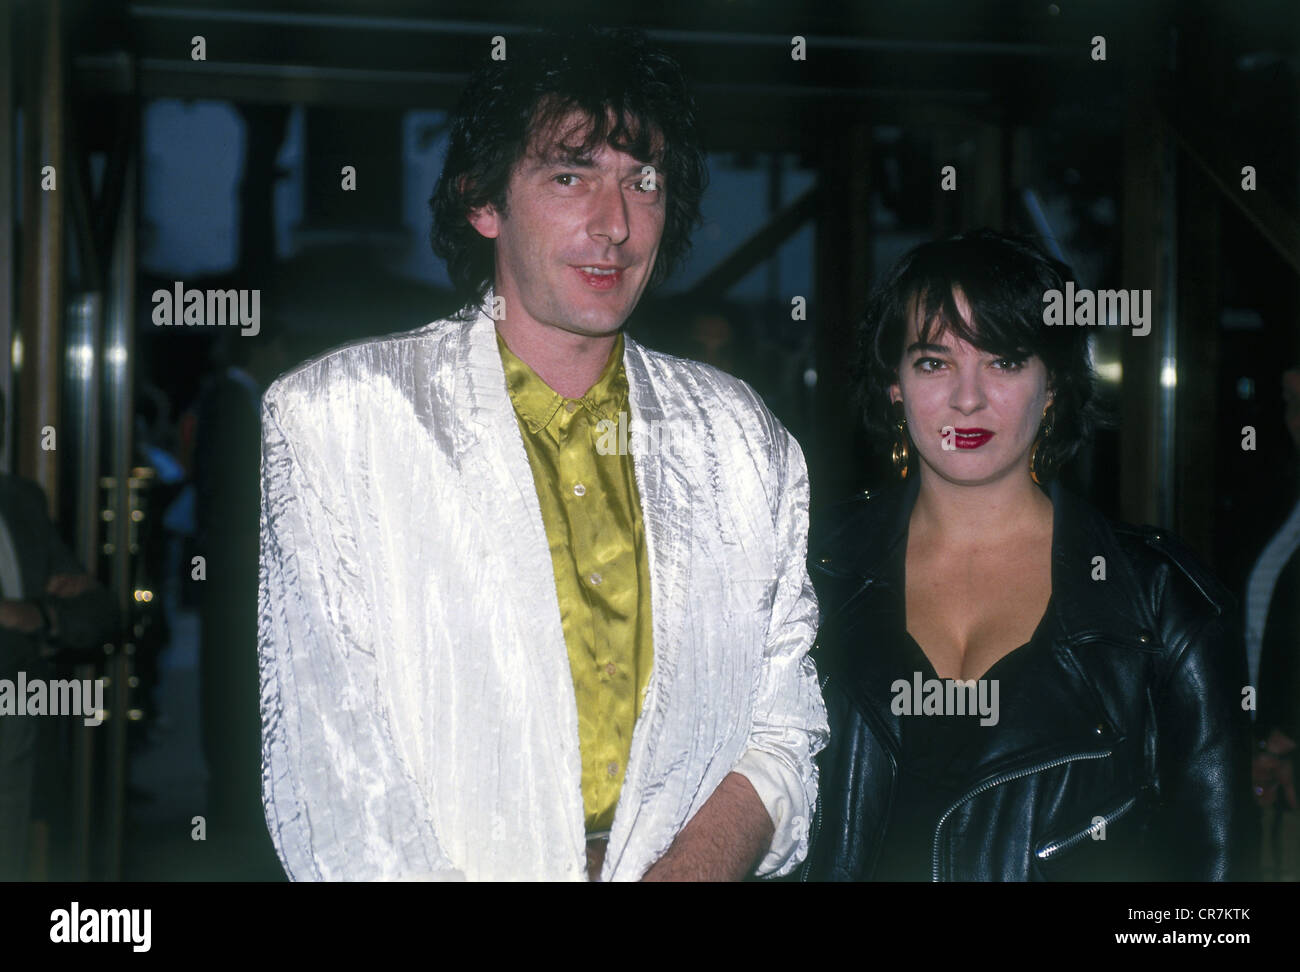 Münchner Freiheit, German band, founded 1981, singer, Stefan Zauner, with girlfriend, half length, 1980s, Stock Photo